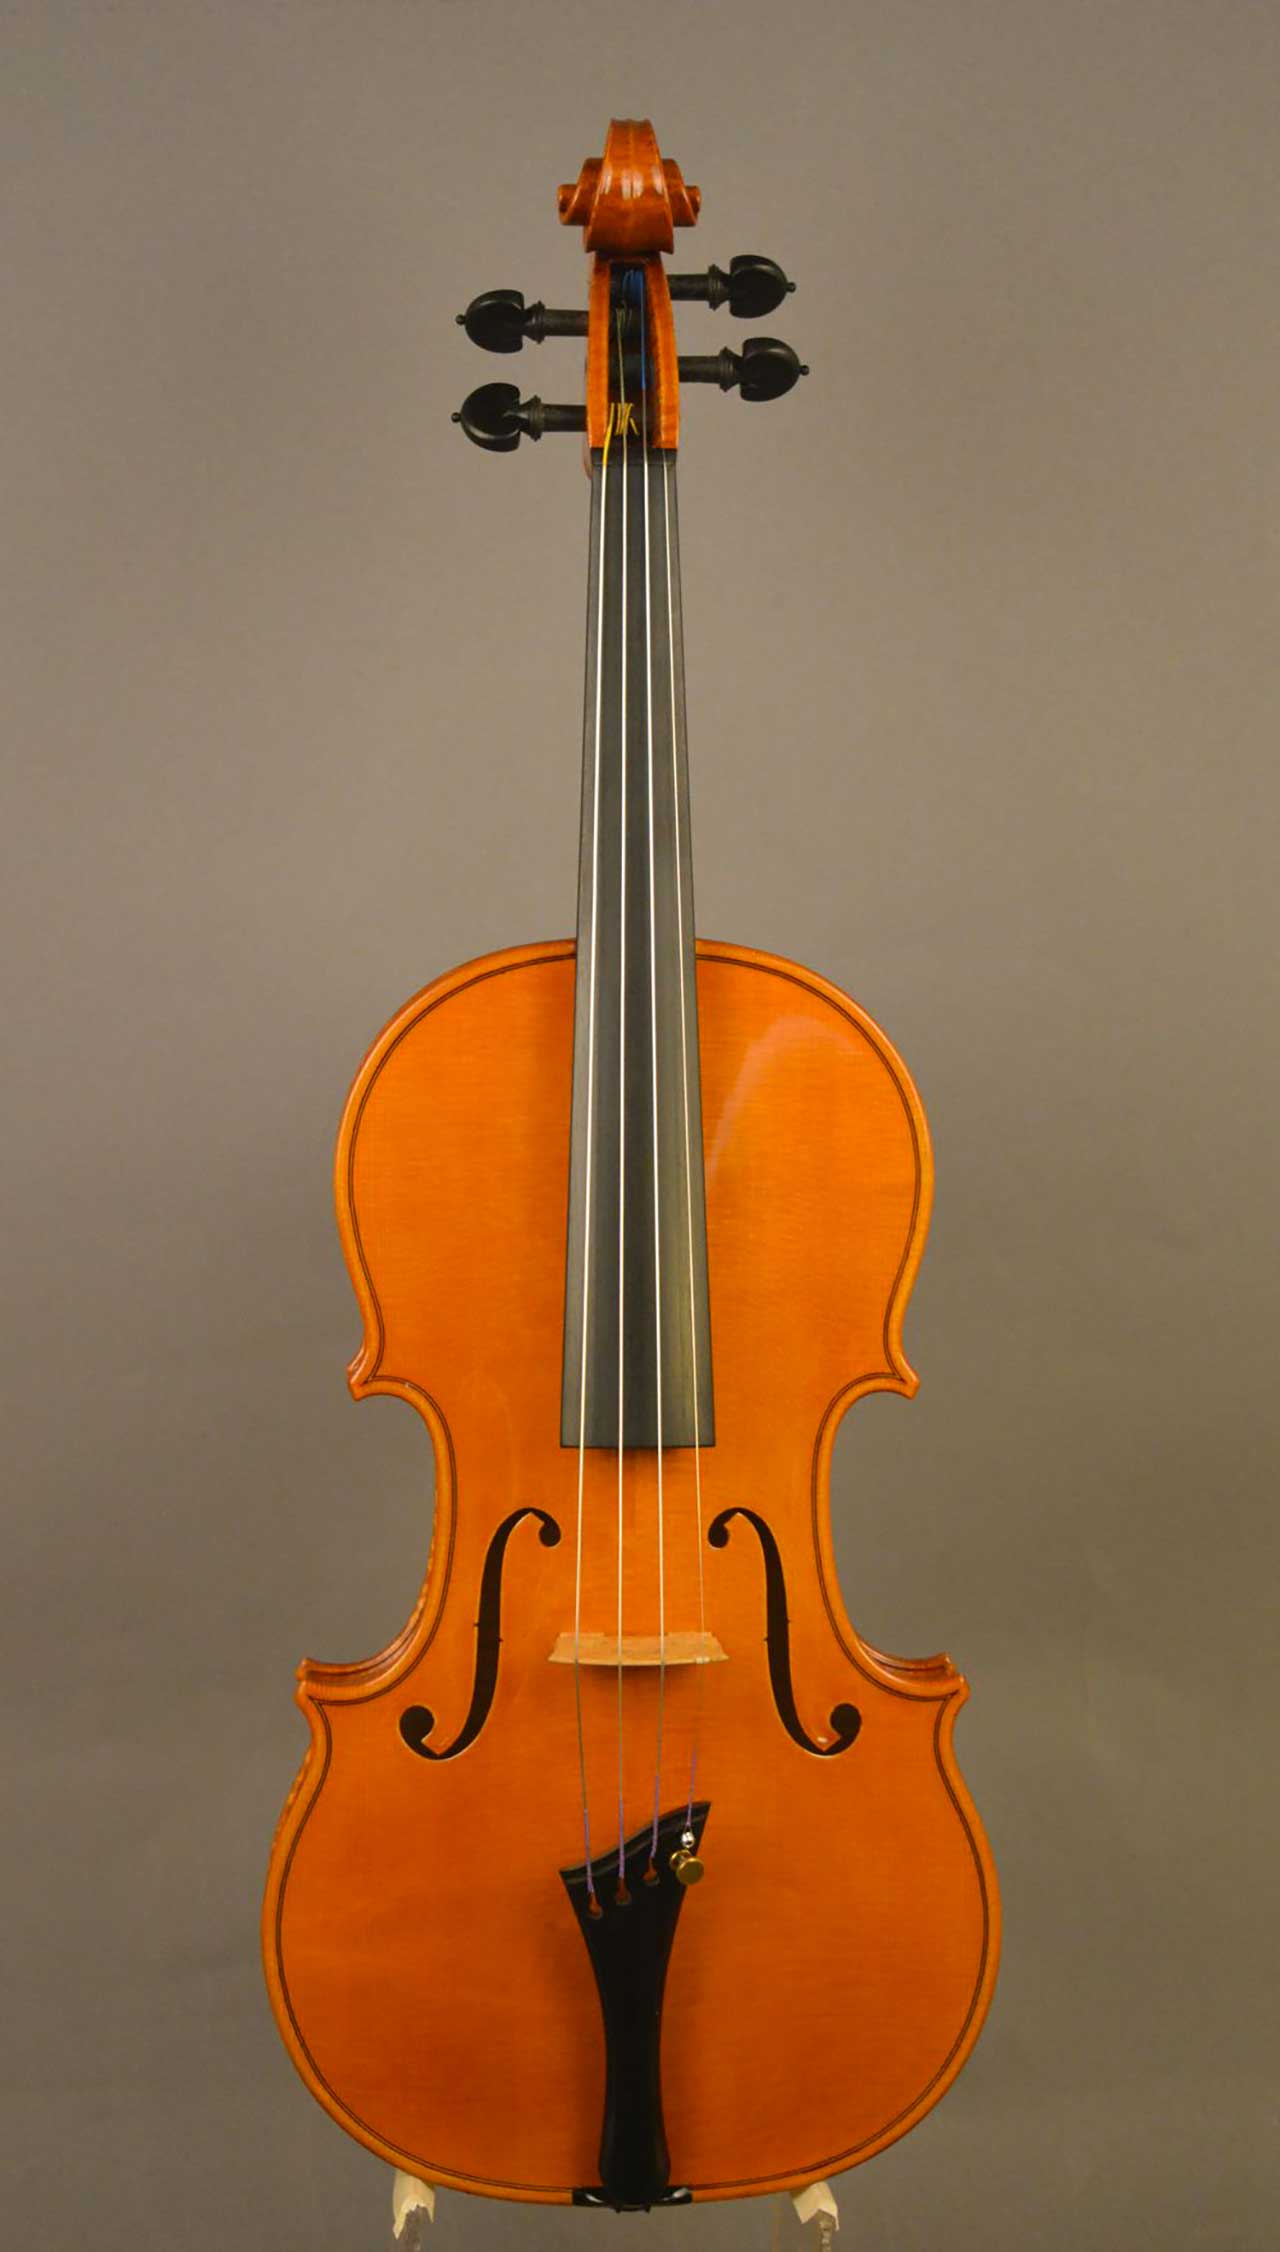 A Legacy of Quality: Lorenzo Frignani's Guitars and Stringed Instruments - The Frignani Lorenzo Violin (Modena 2019)